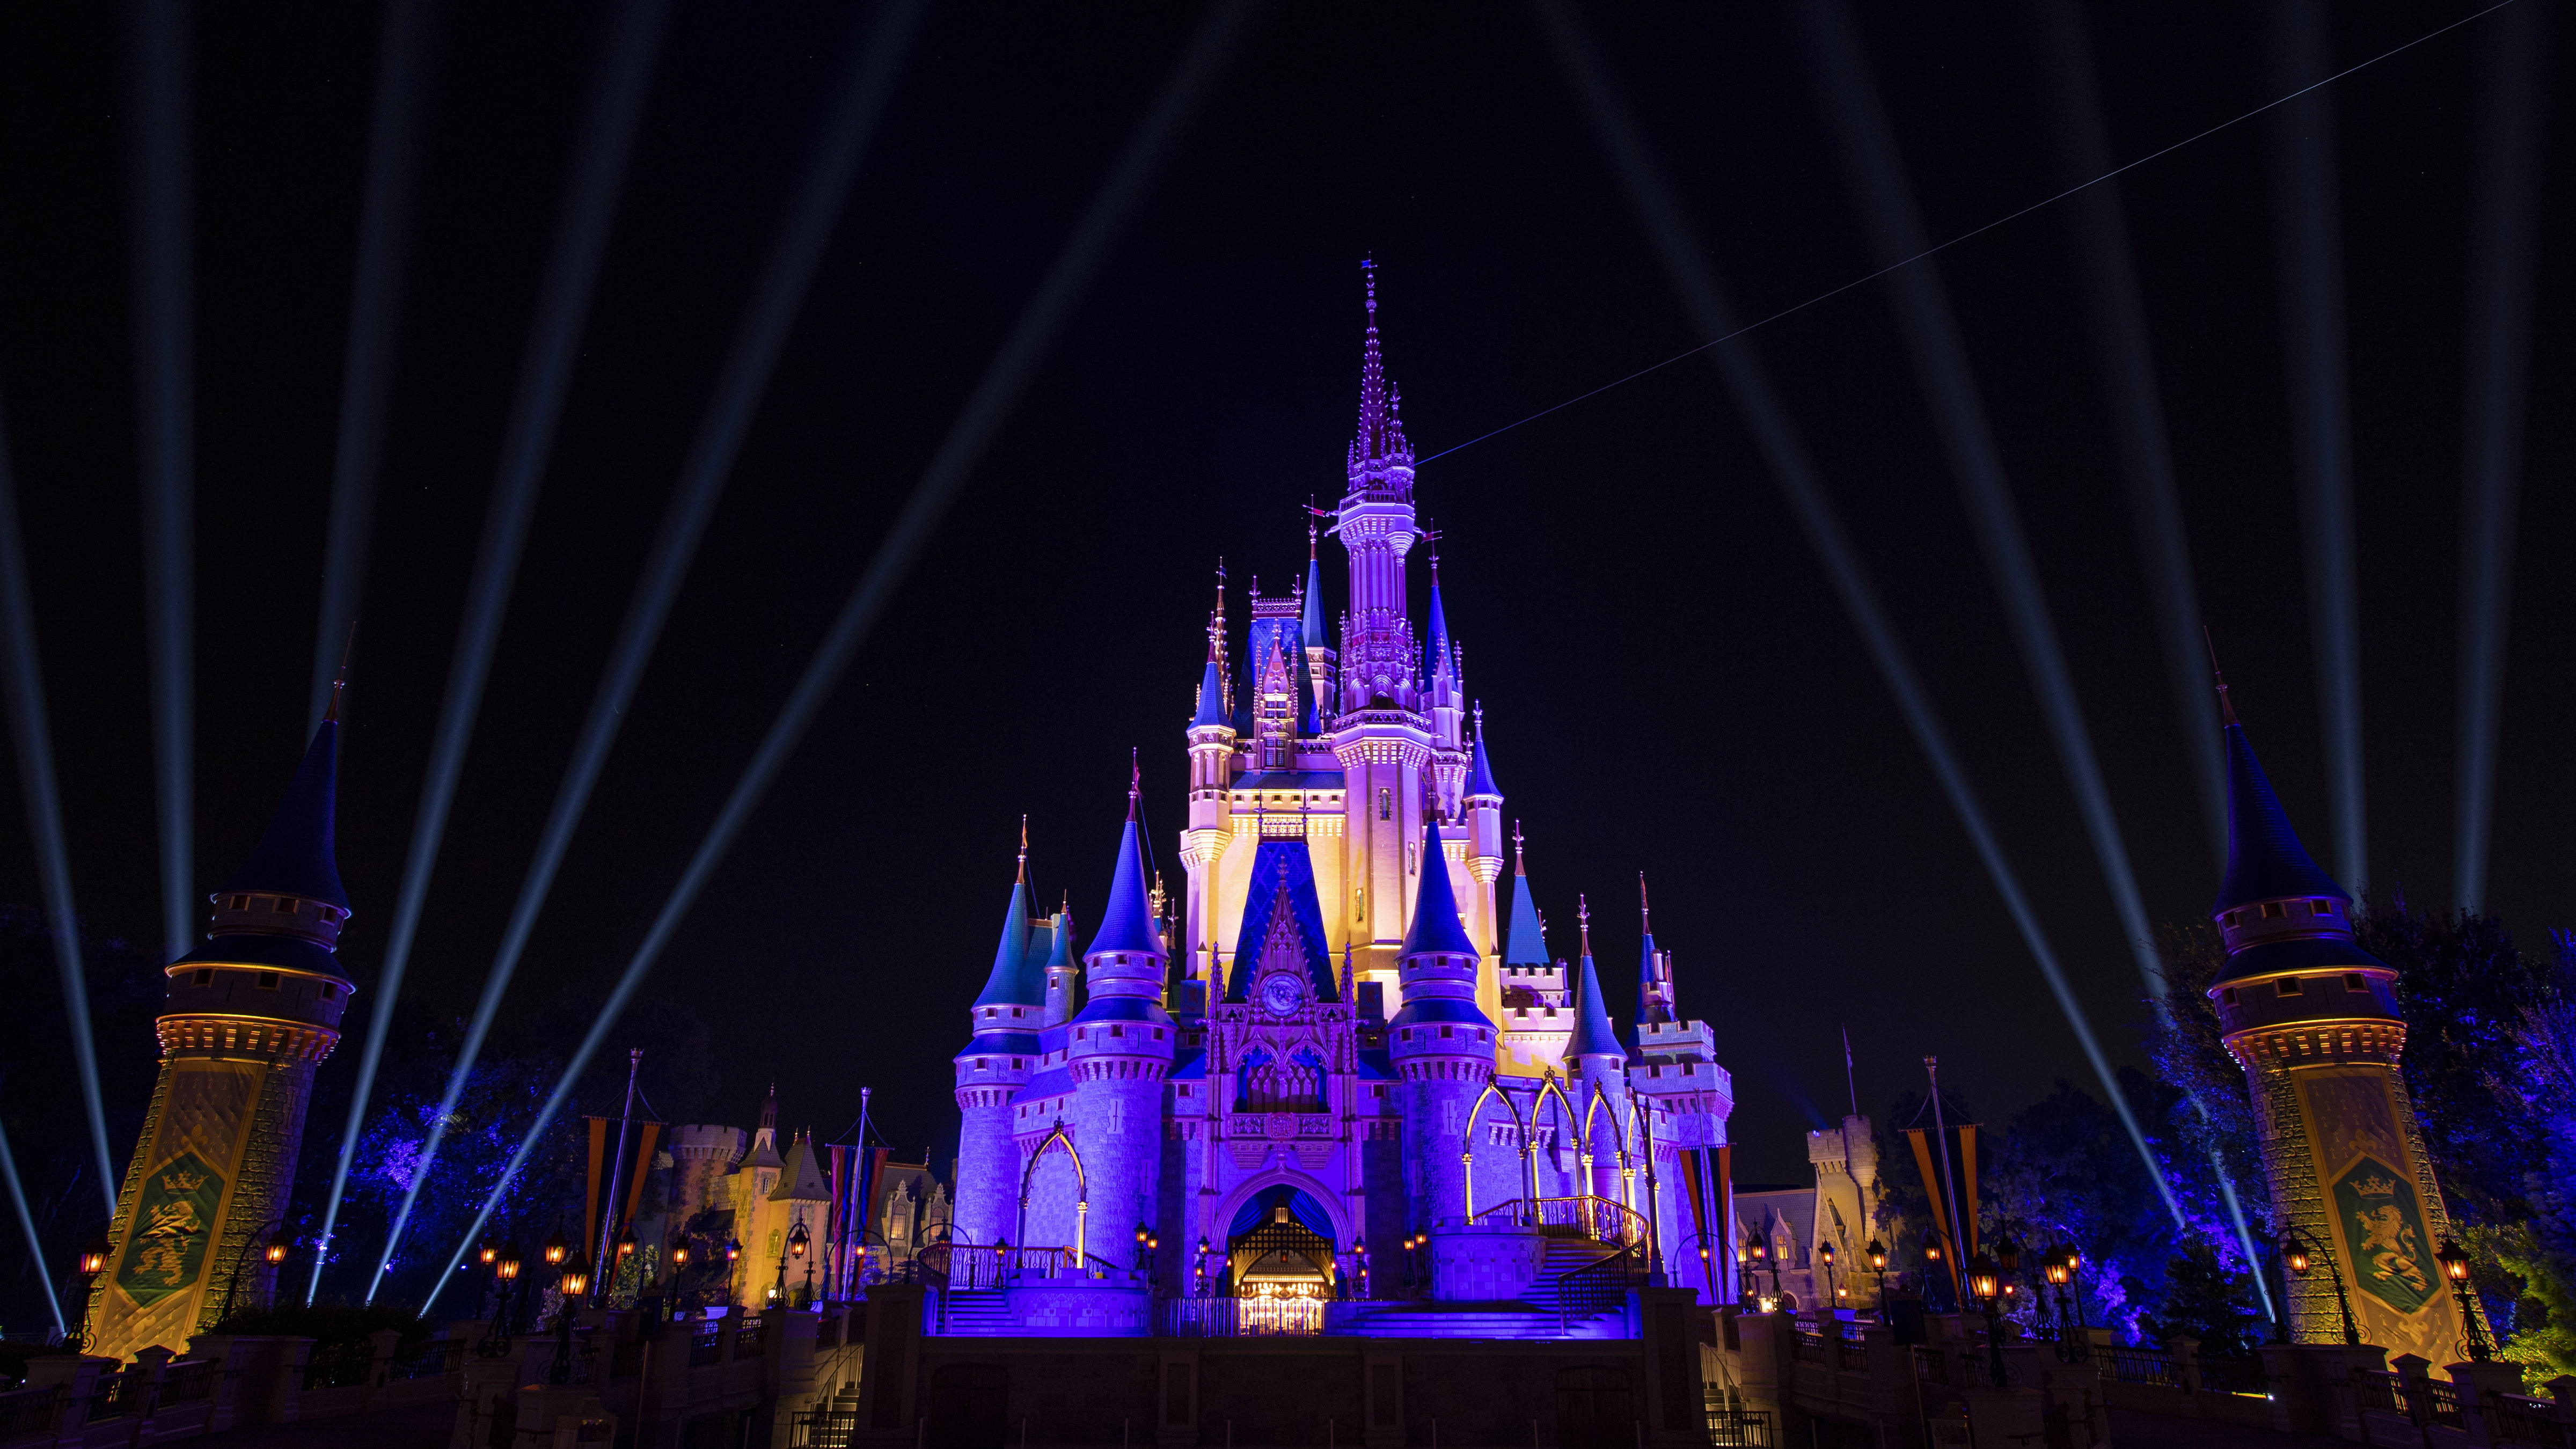 Cinderella's Castle at Disney World at night